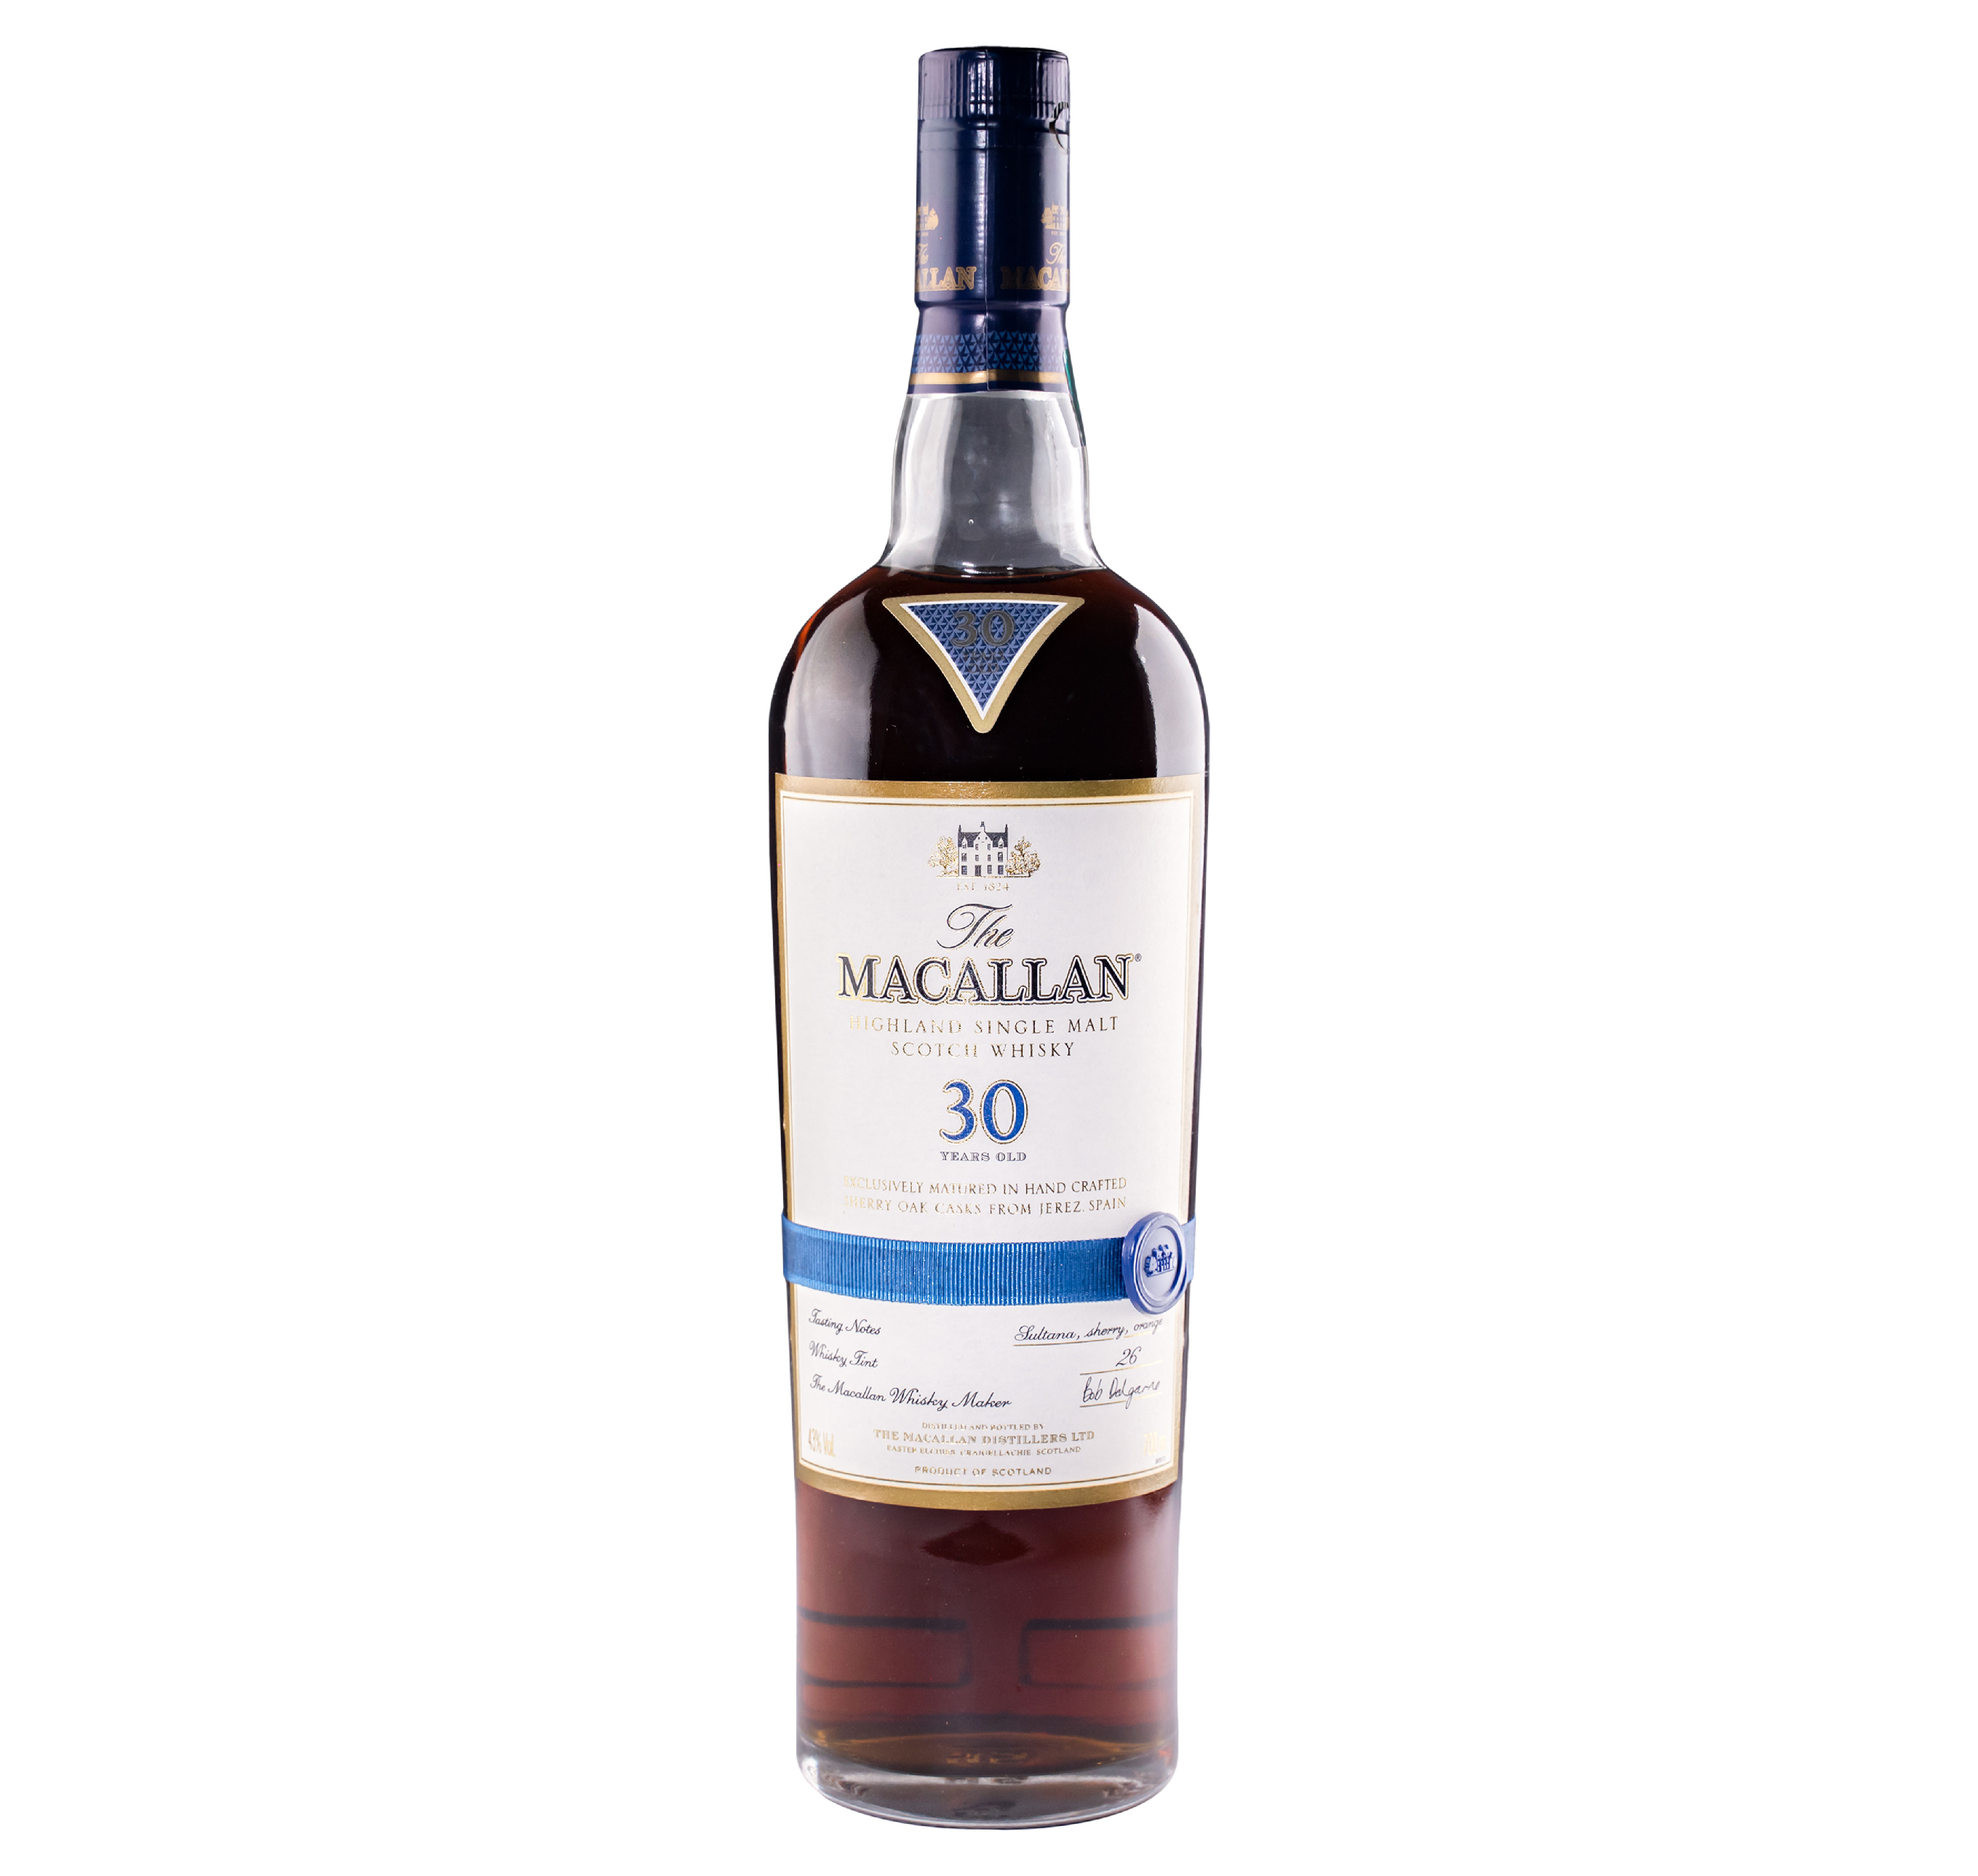 The Macallan 30 years